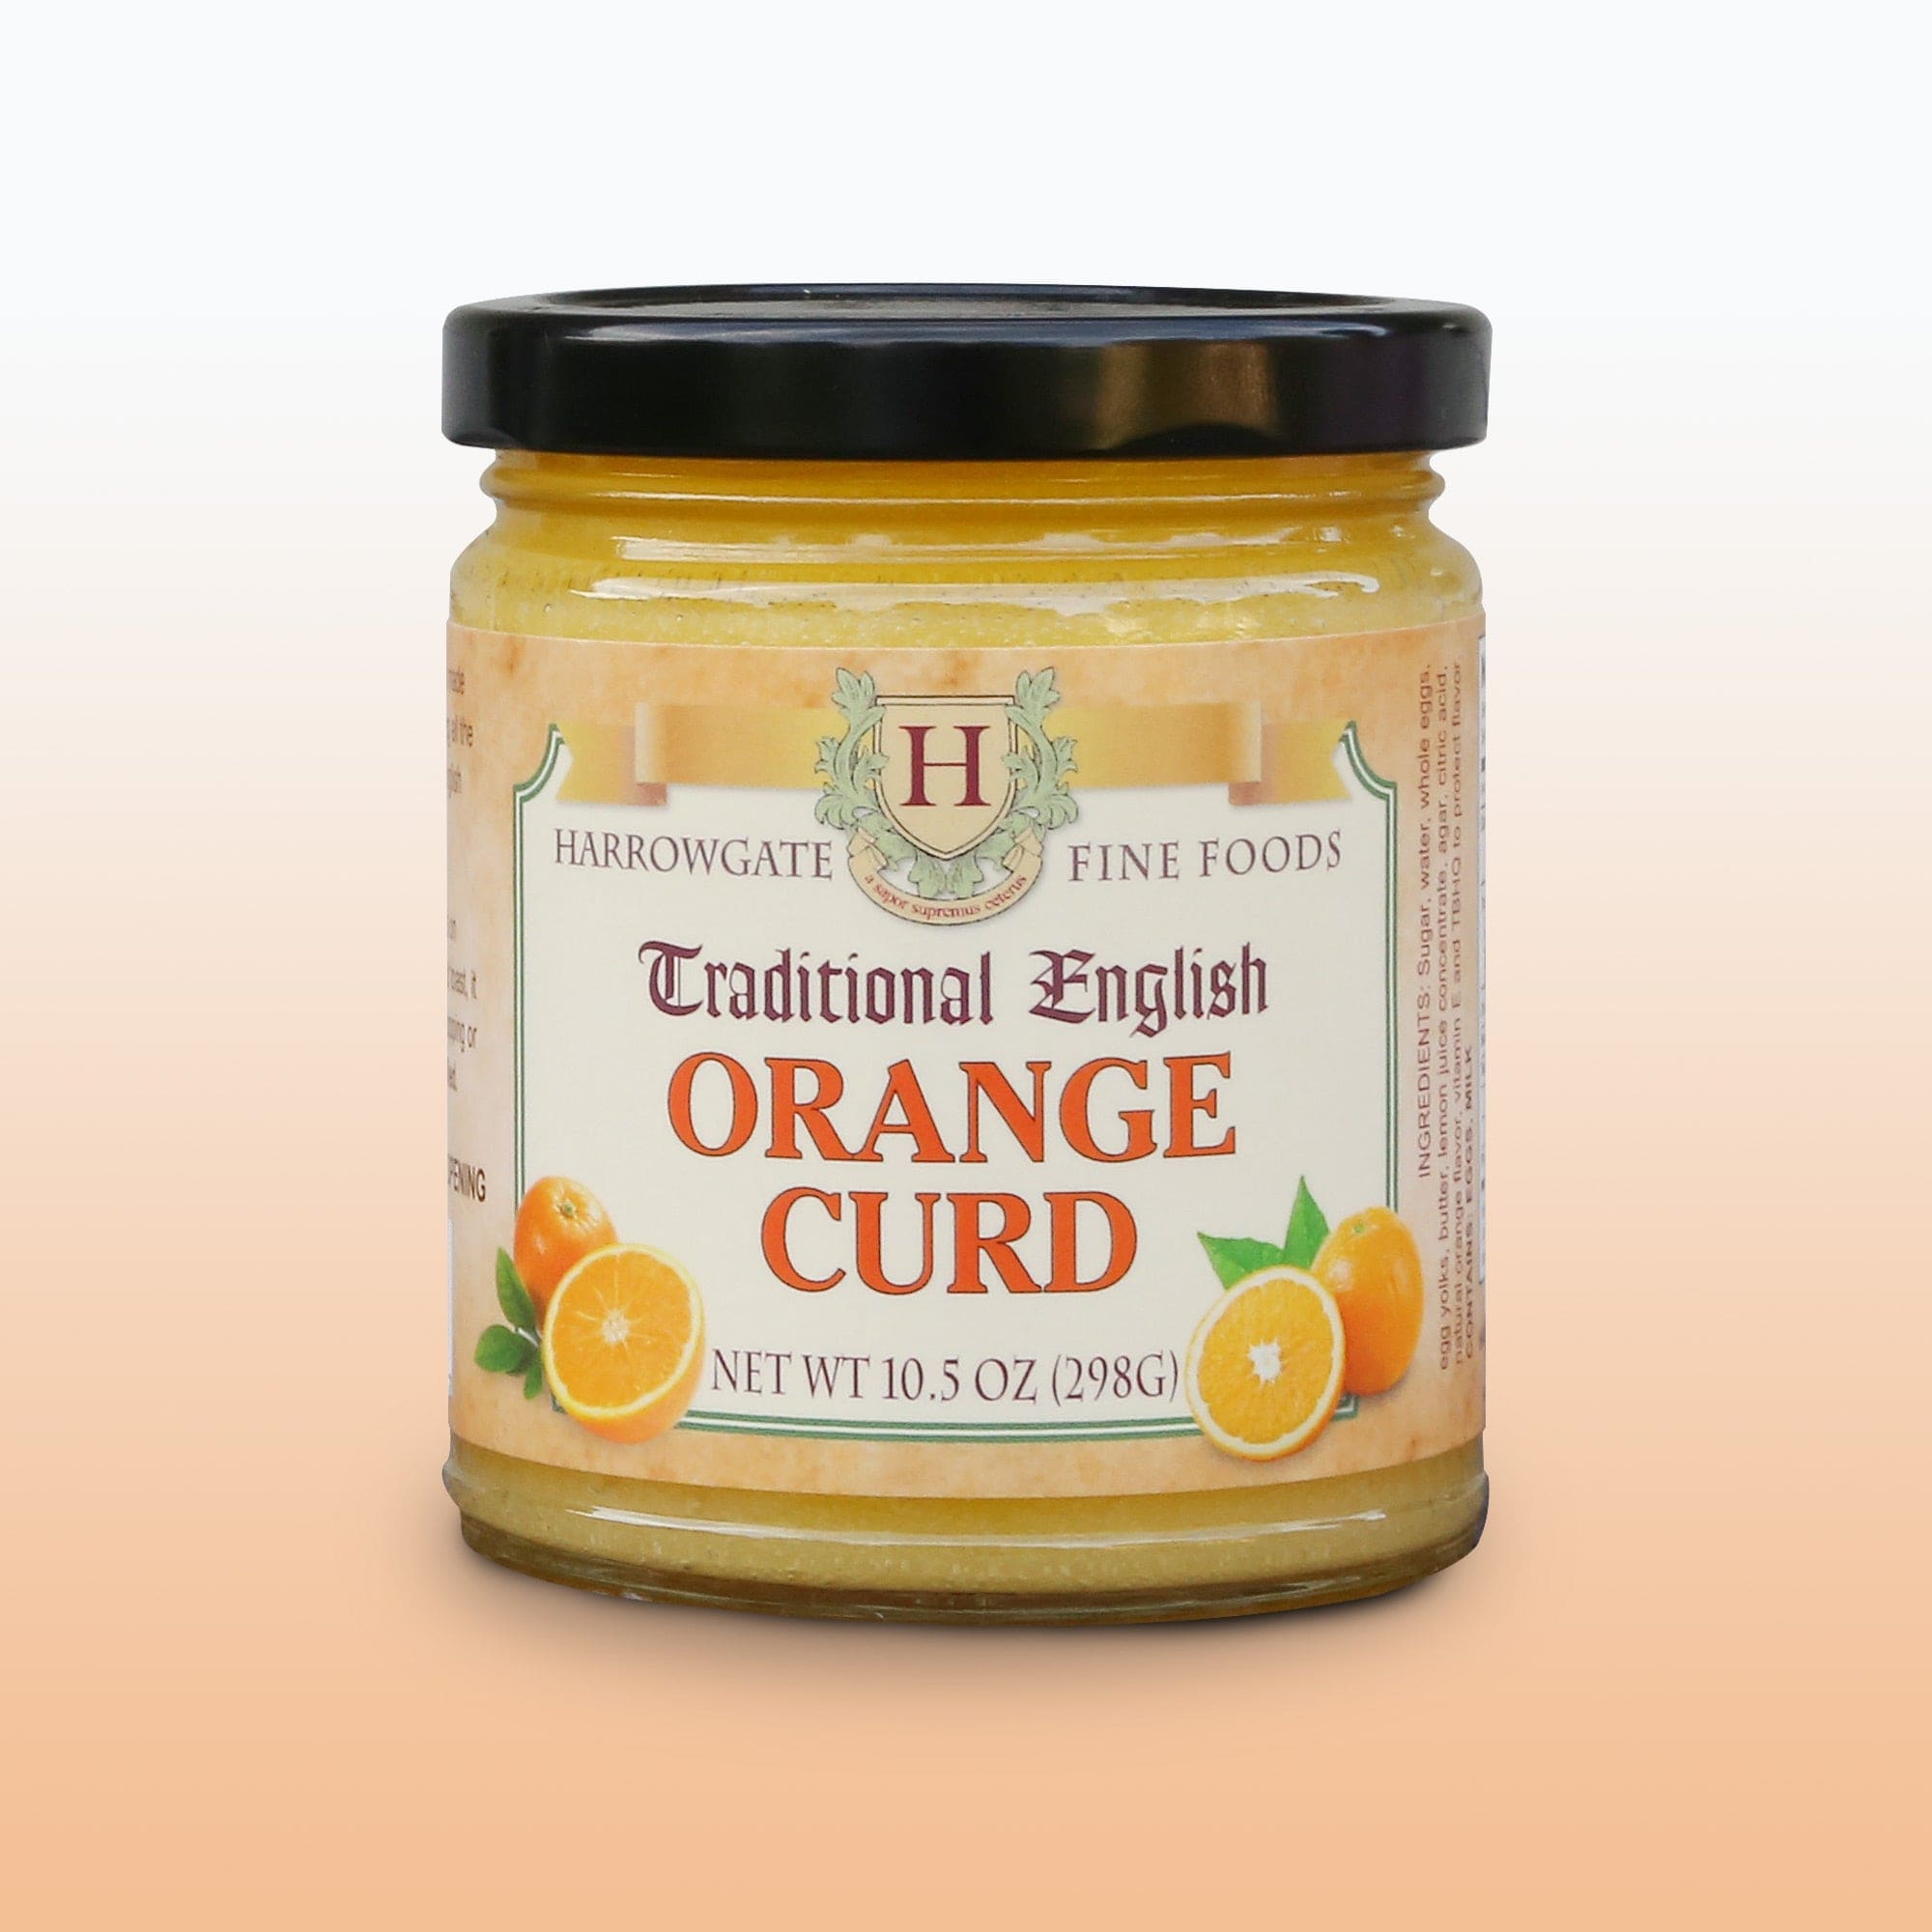 Harrowgate Traditional English Orange Curd